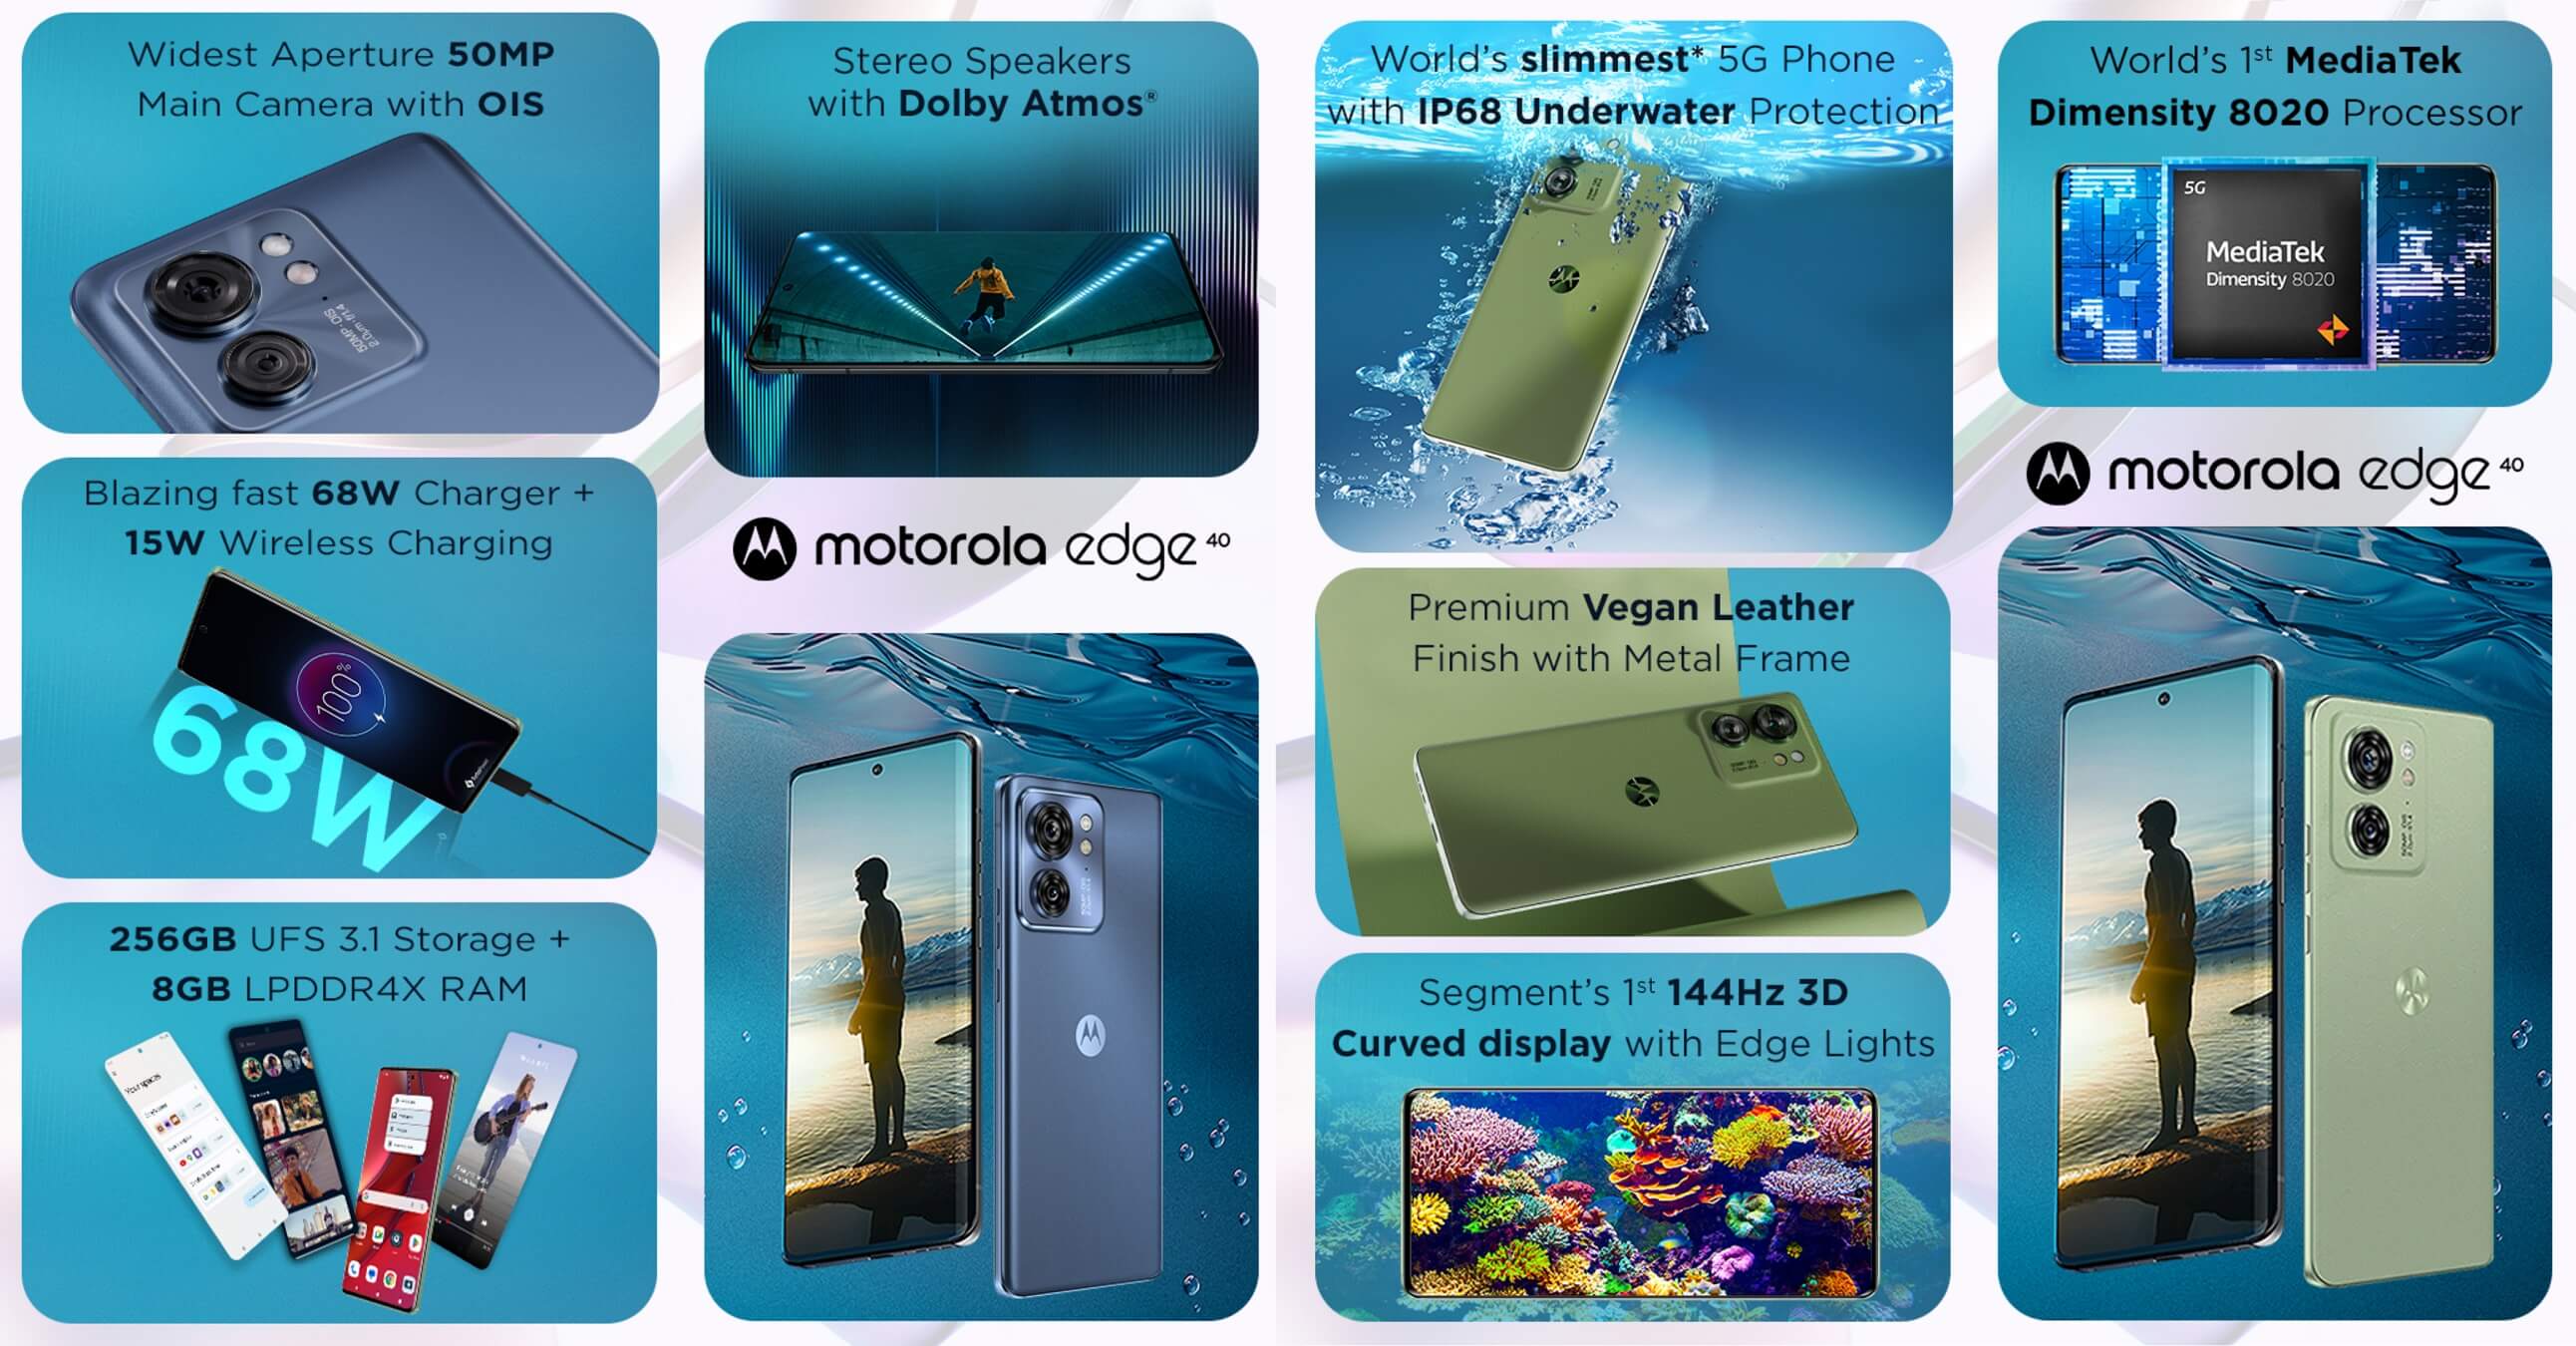 Motorola edge 40 features.